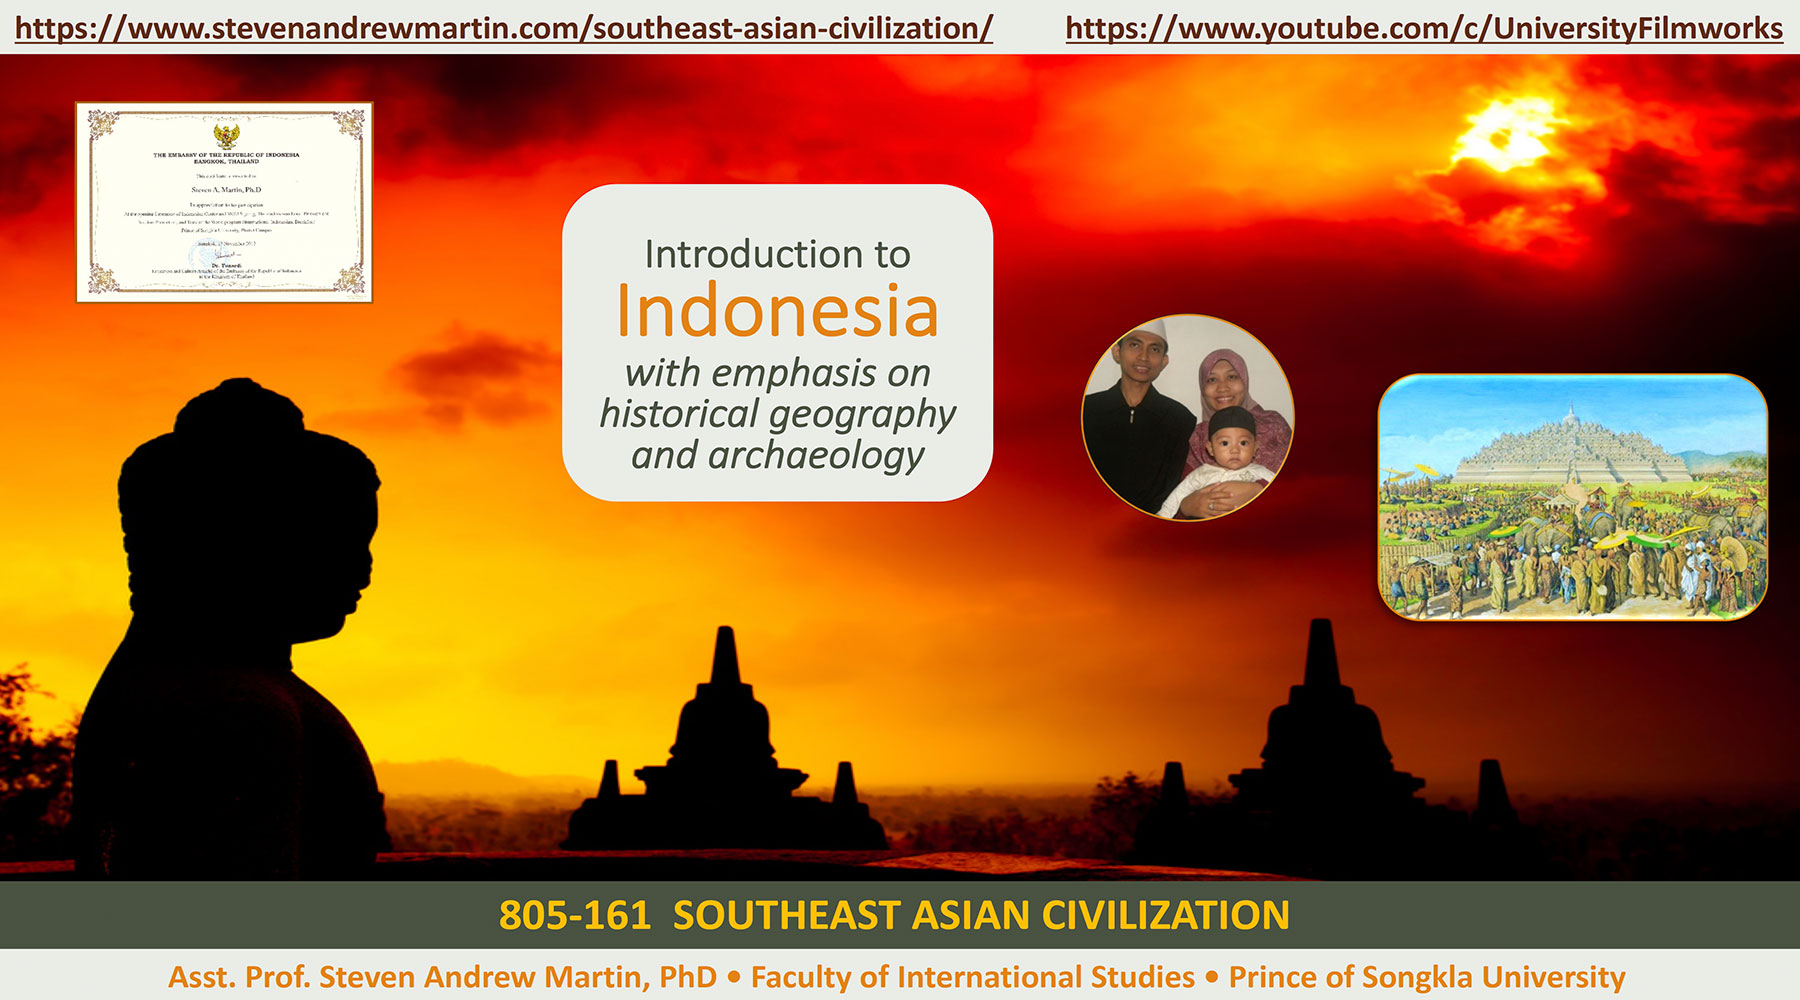 Professor Dr Steven Andrew Martin | Southeast Asian Civilization PowerPoint | Prince of Songkla University | Faculty of International Studies